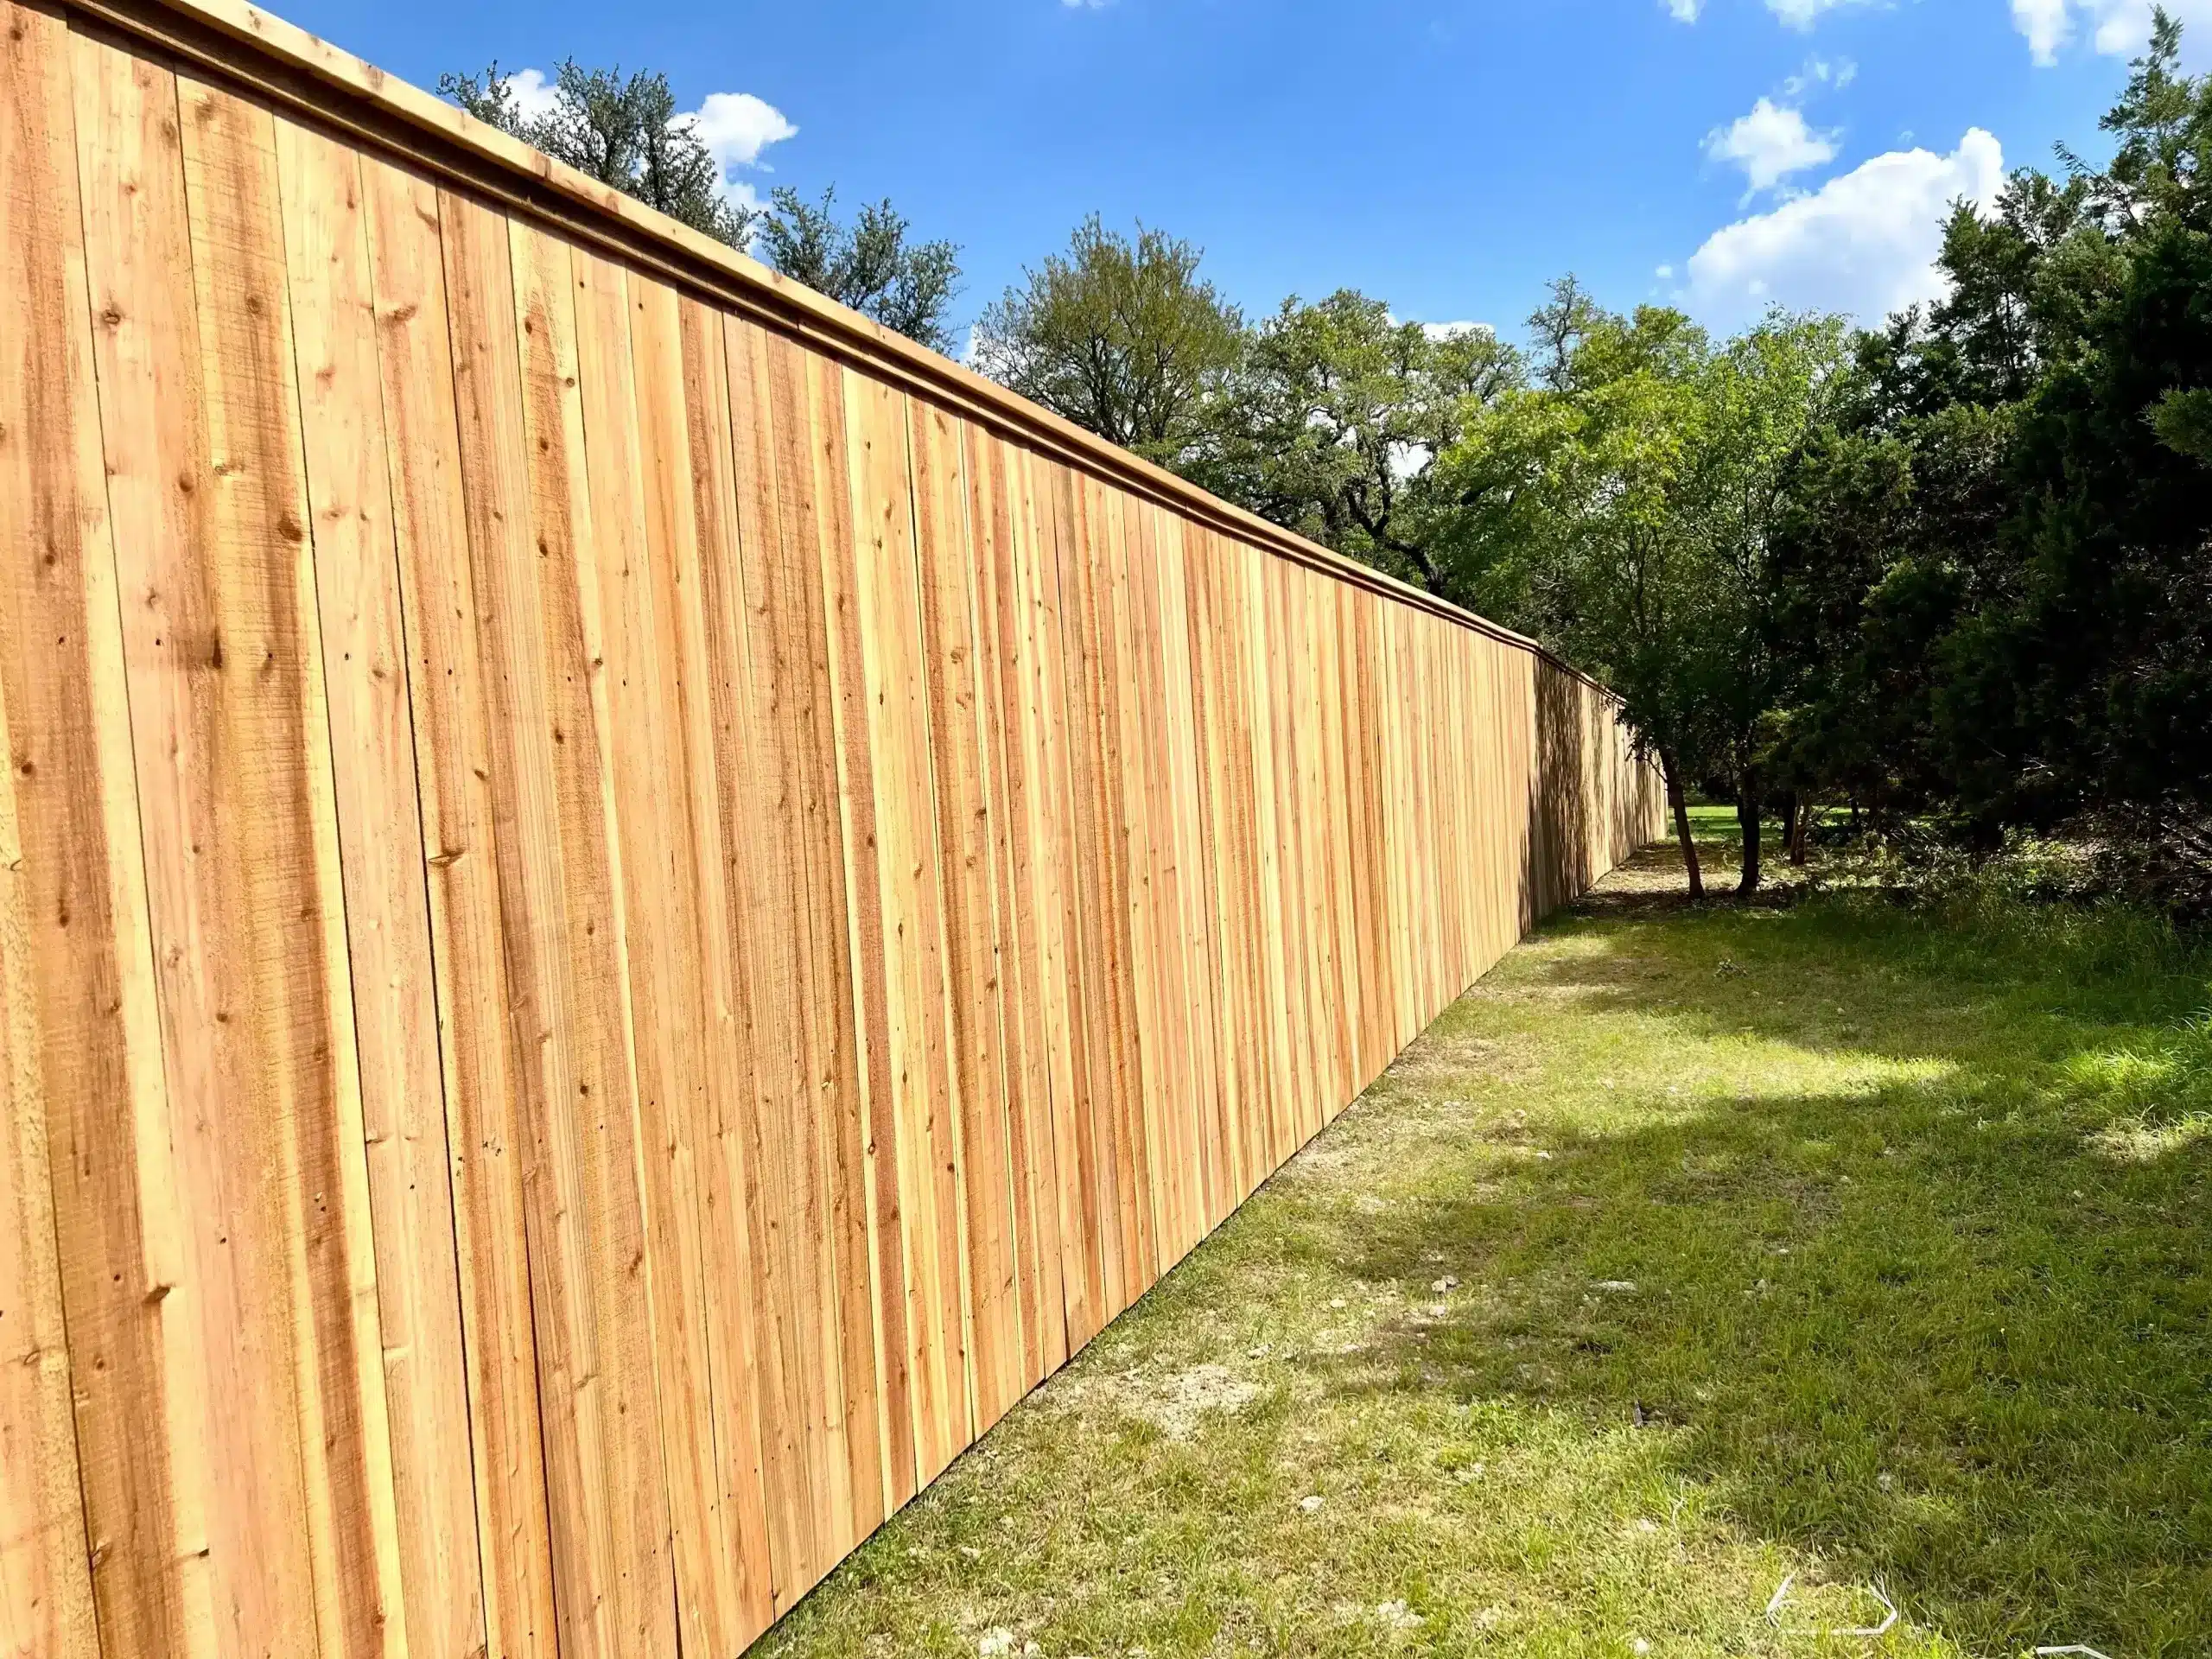 Cedar wood privacy fence in an Austin backyard